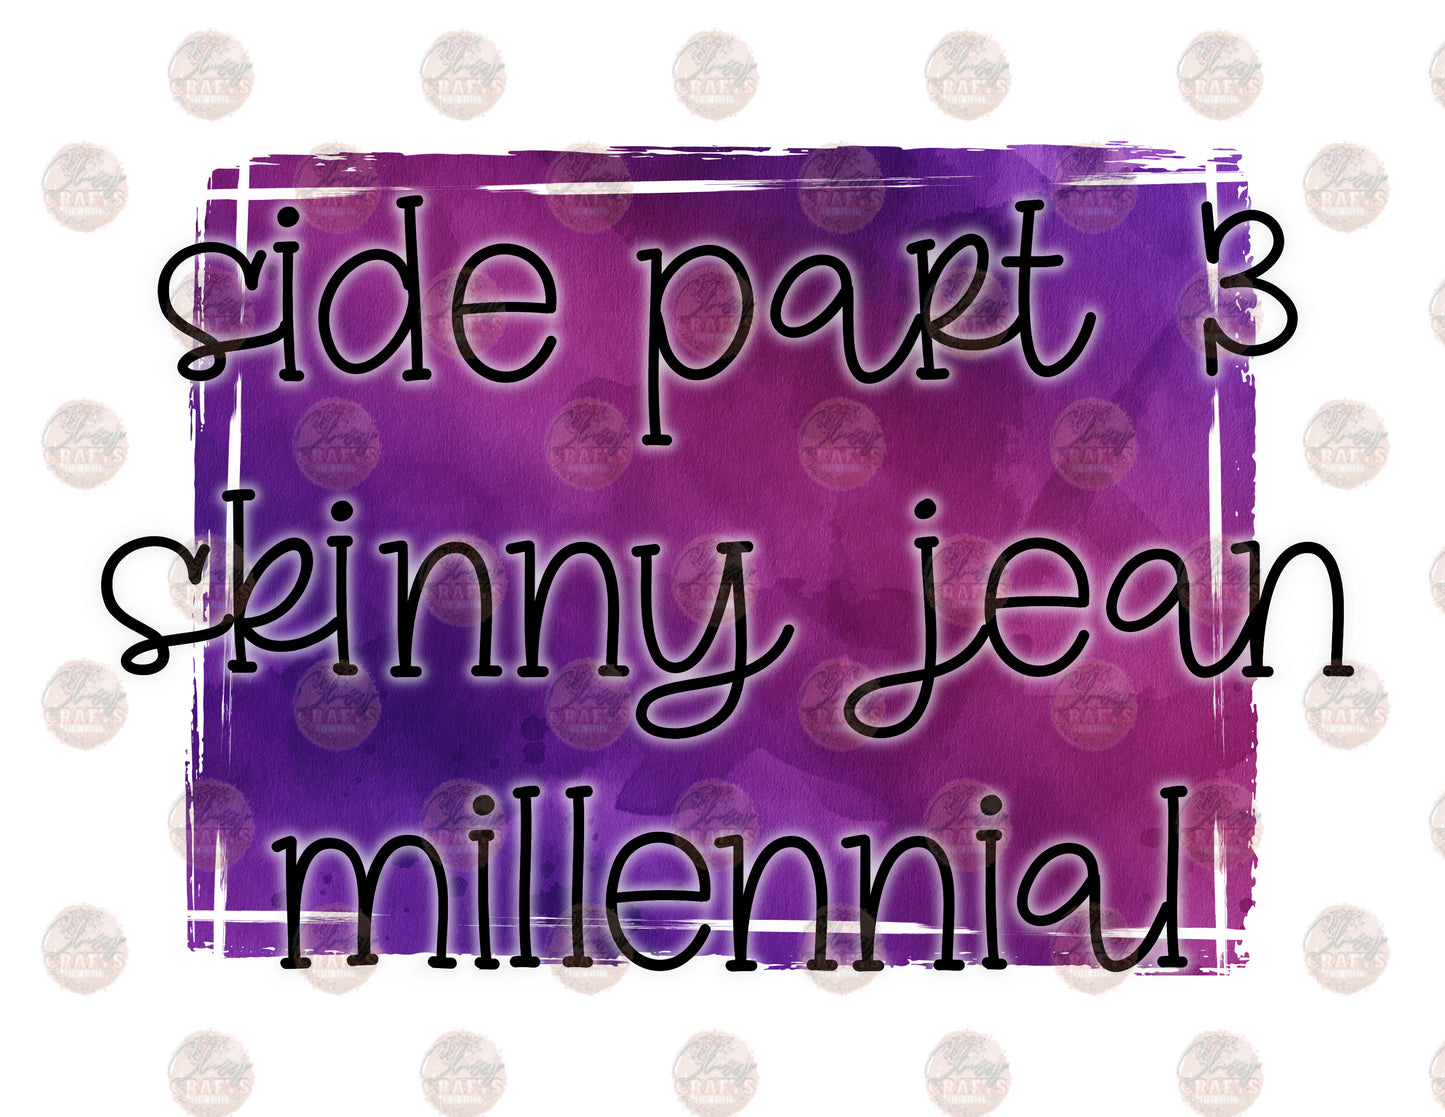 Side Part & Skinny Jean Millennial - Sublimation Transfer